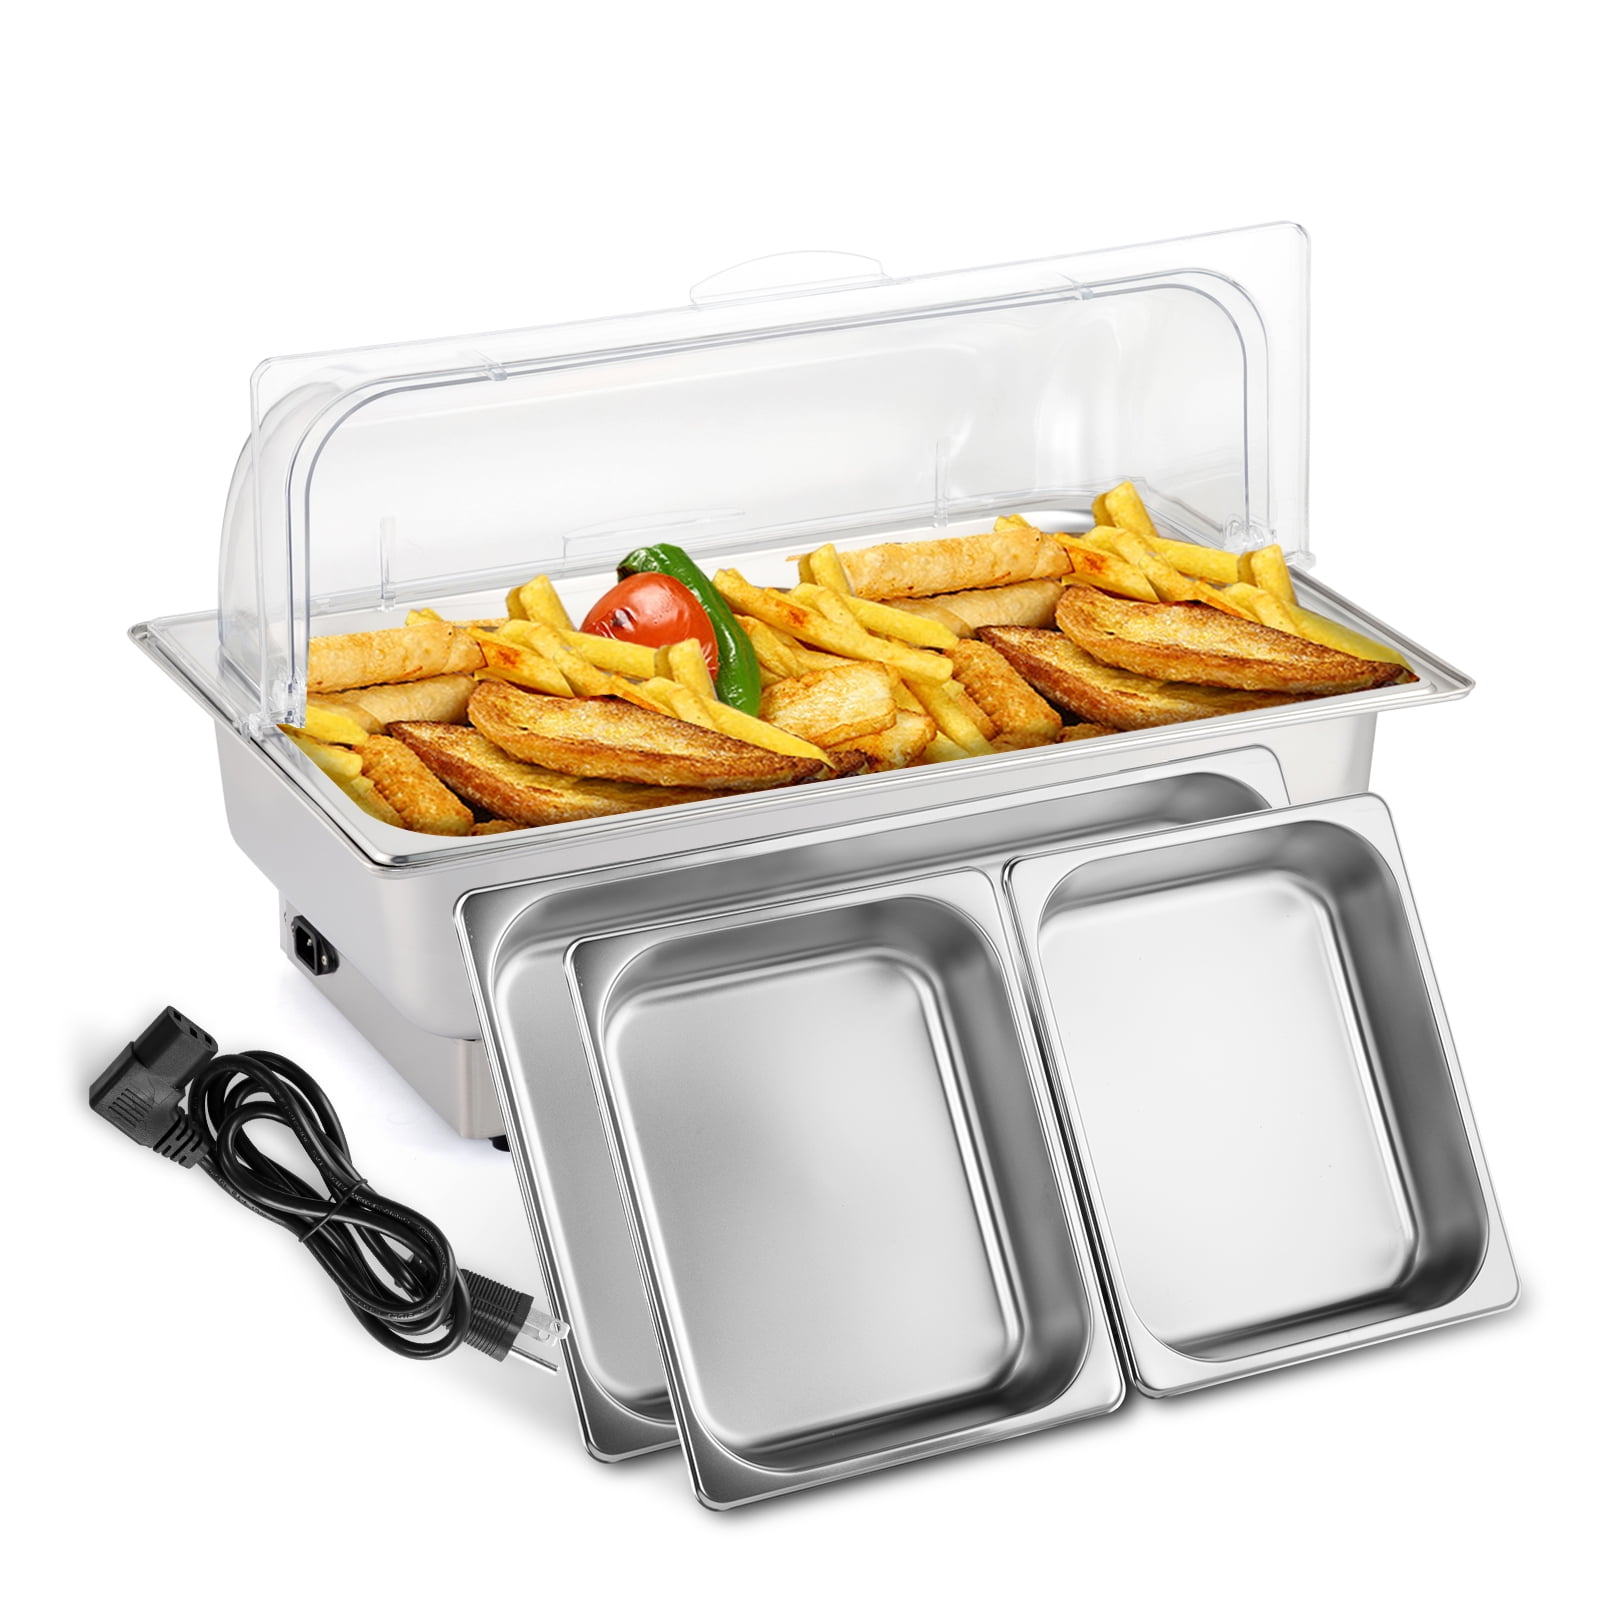 Chefman Compact Glasstop Warming Tray with Adjustable Temperature Control,  Mini 15x12 inch, Black